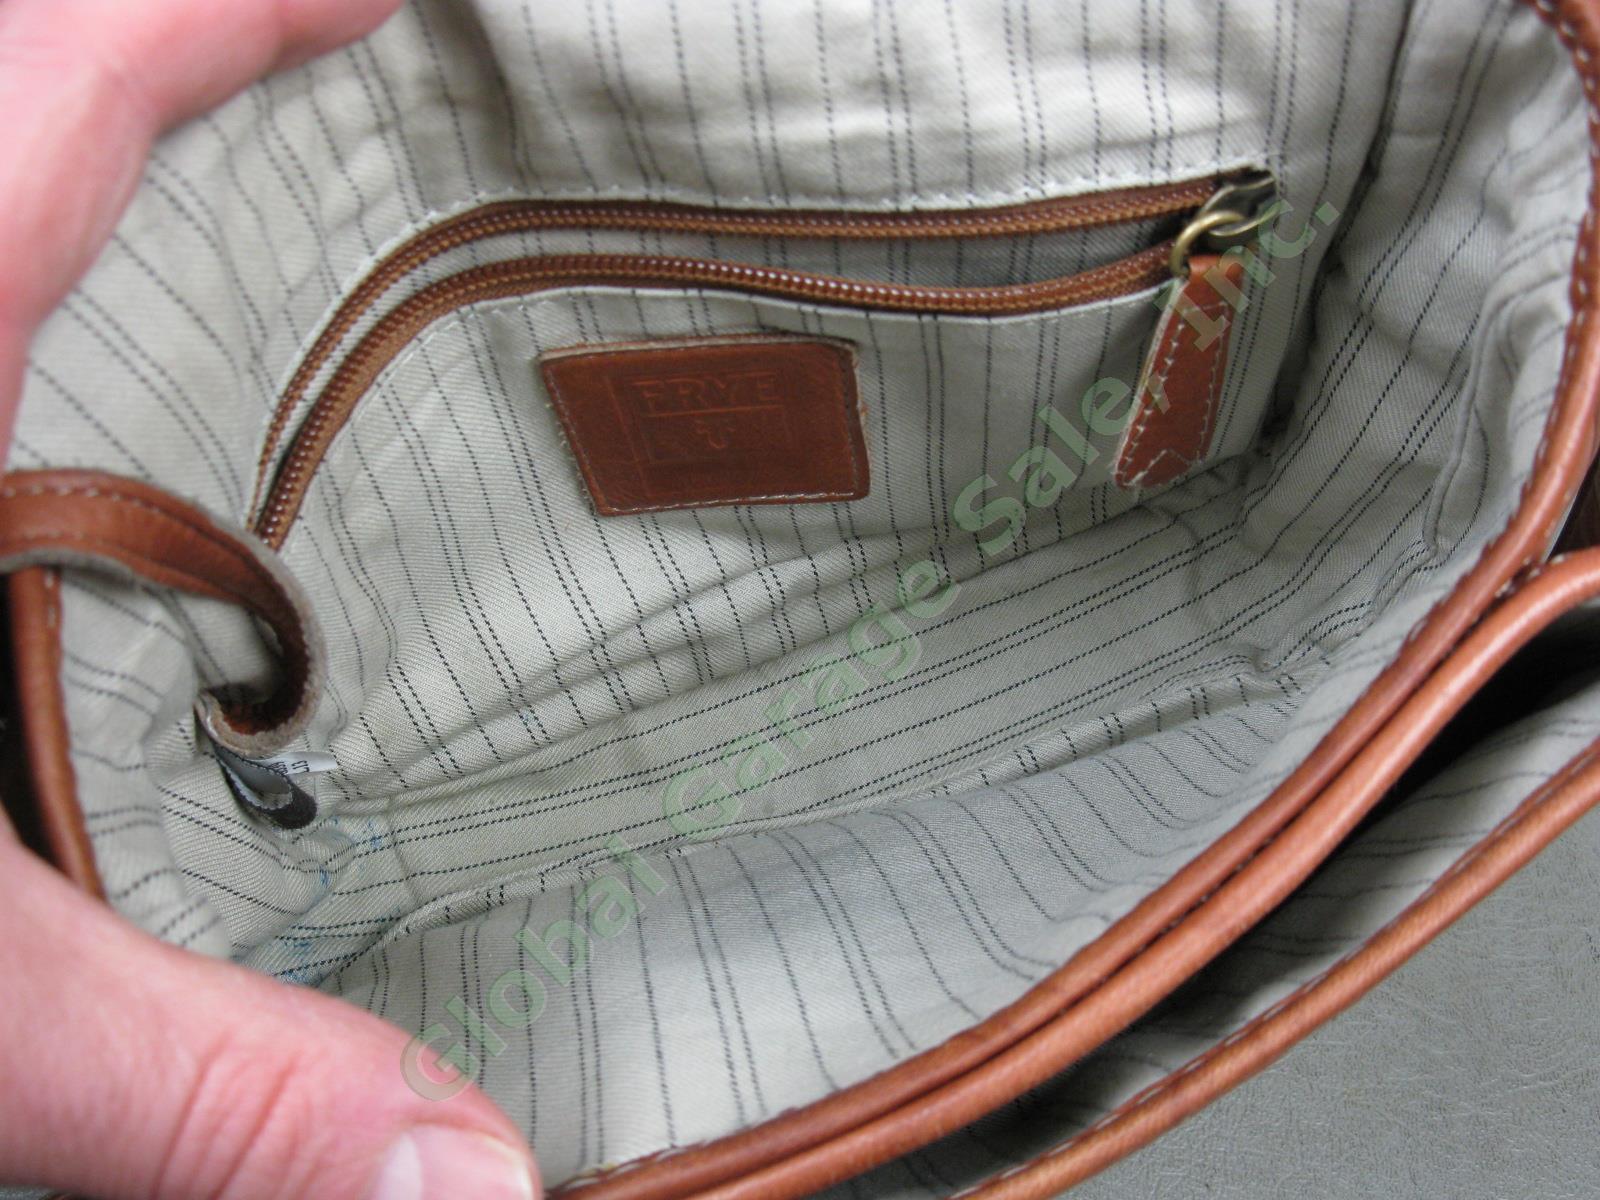 Frye Campus Saddle Cross Body Leather Handbag Clutch DB891 $298 Retail NORESERVE 8